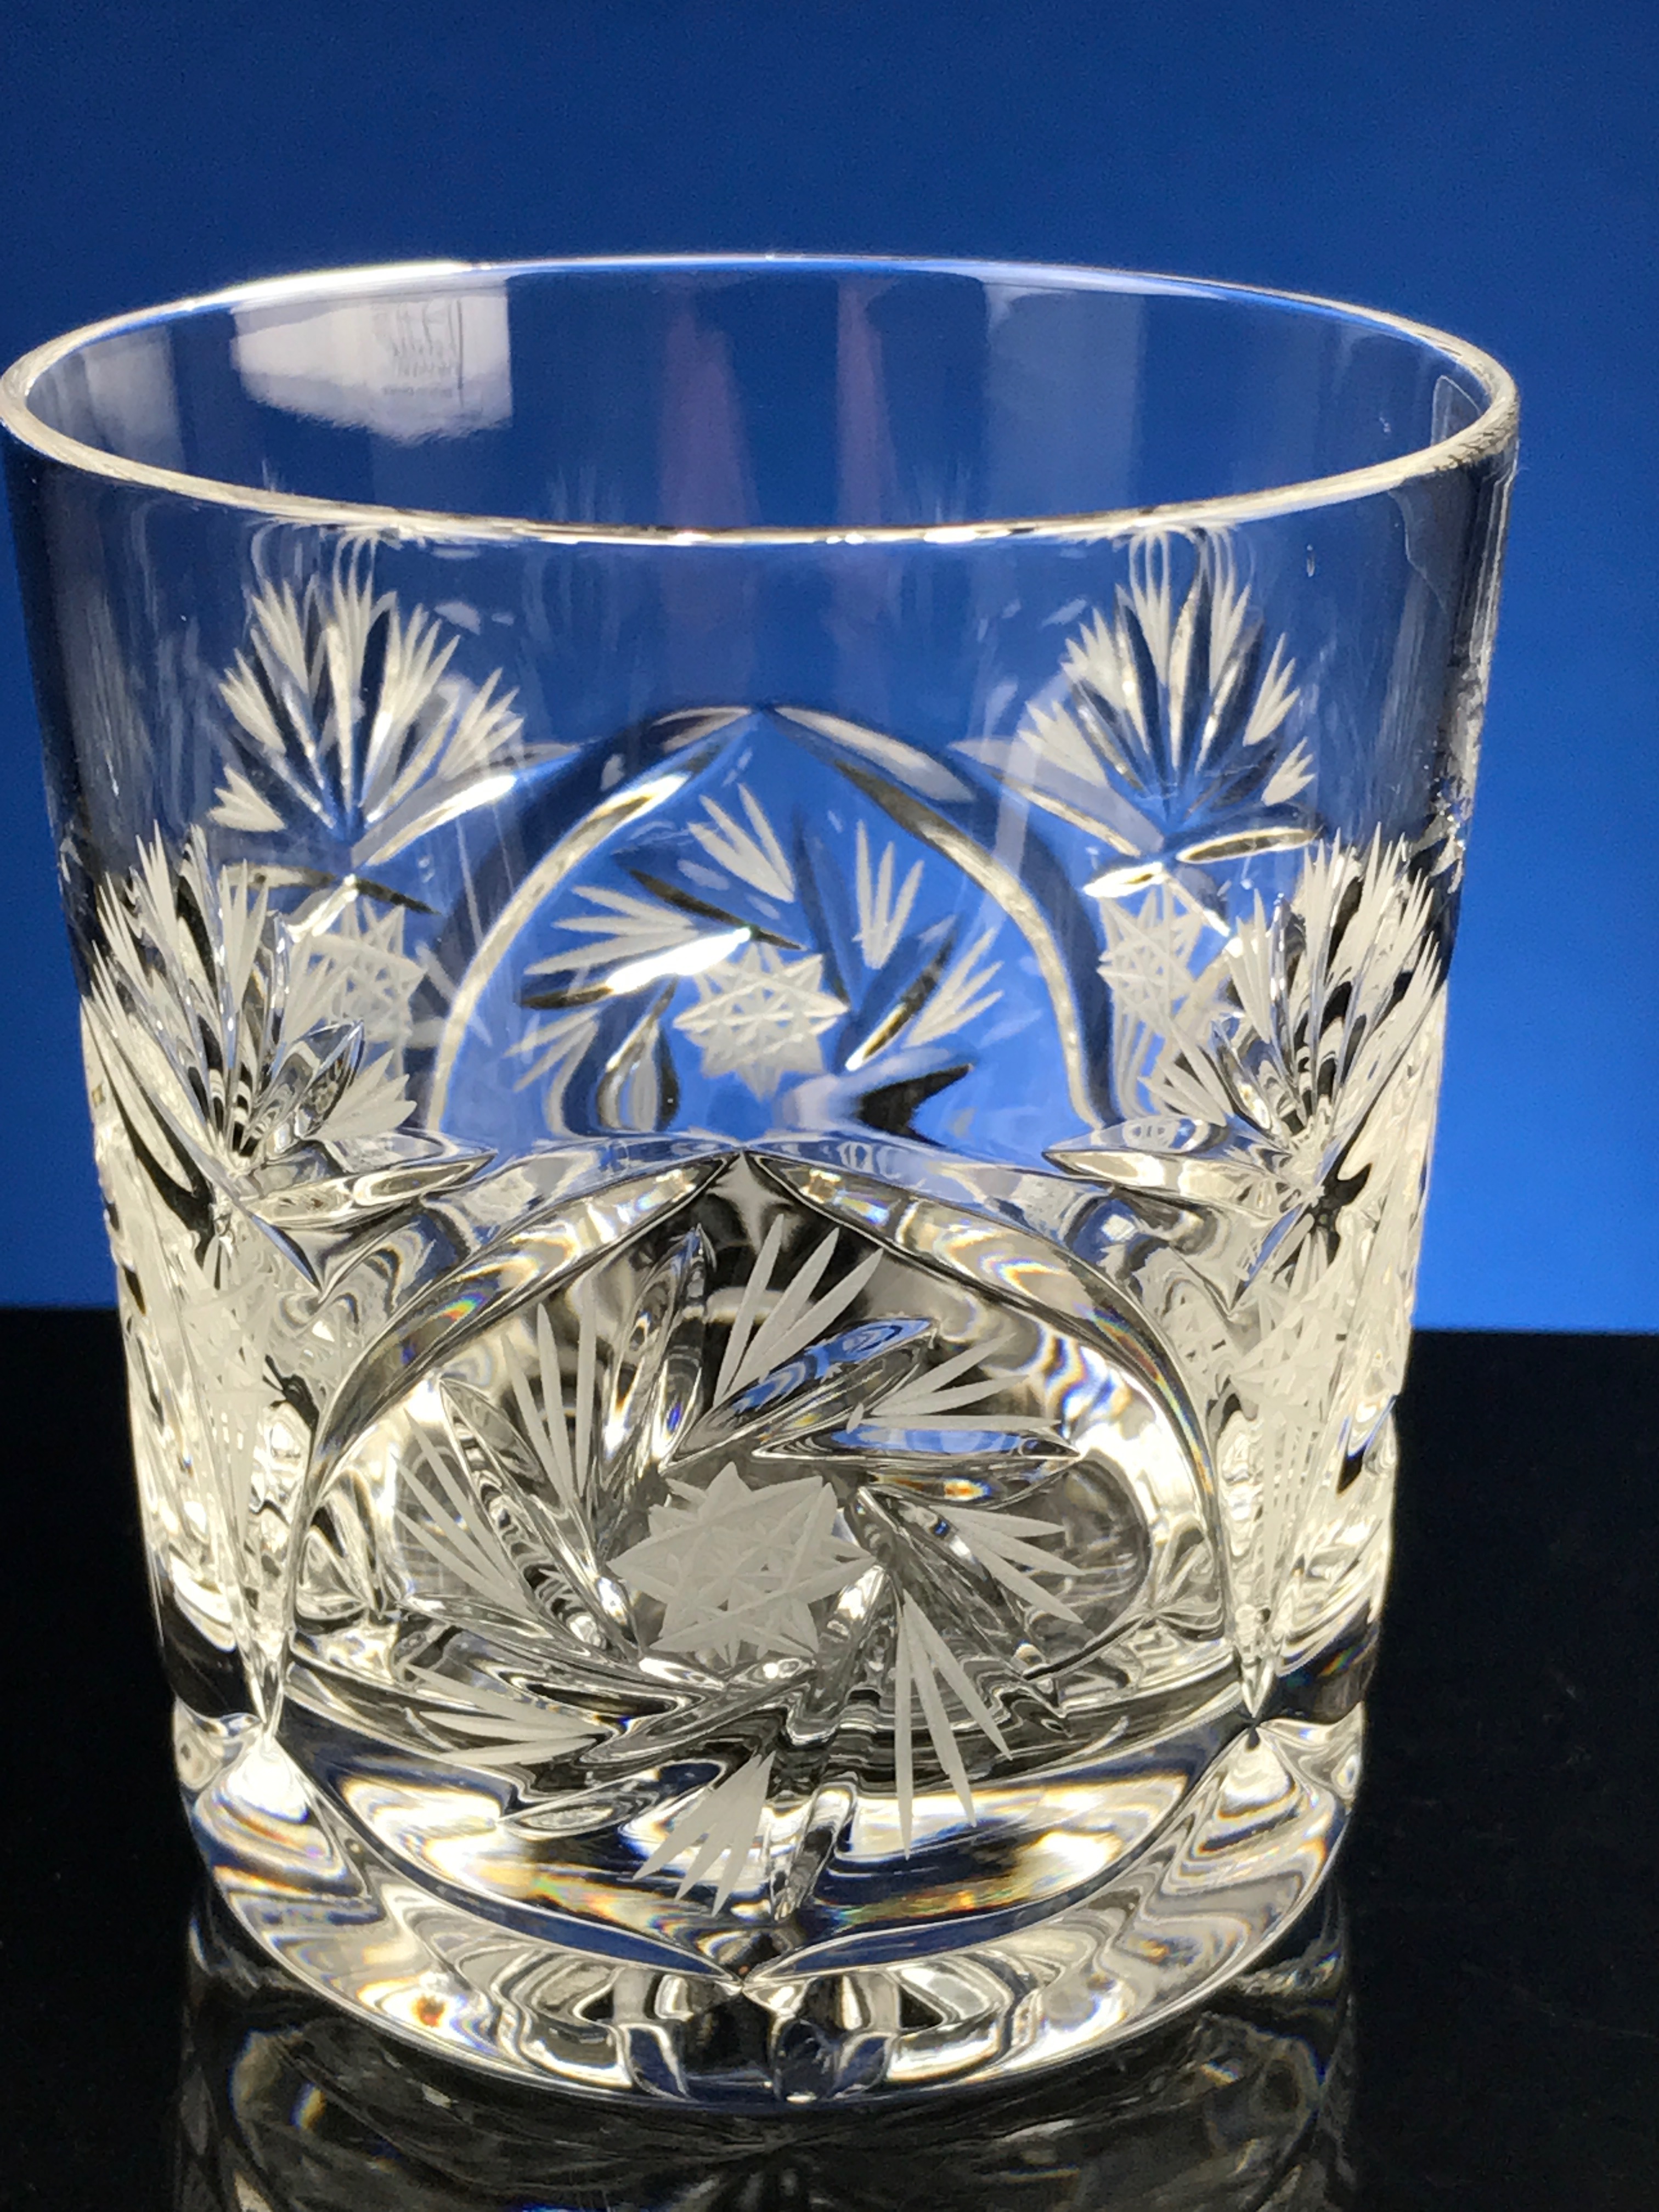 Achtervolging Melbourne St Whisky glazen Ster - Crystal-online de webshop met het mooiste en  goedkoopste kristal